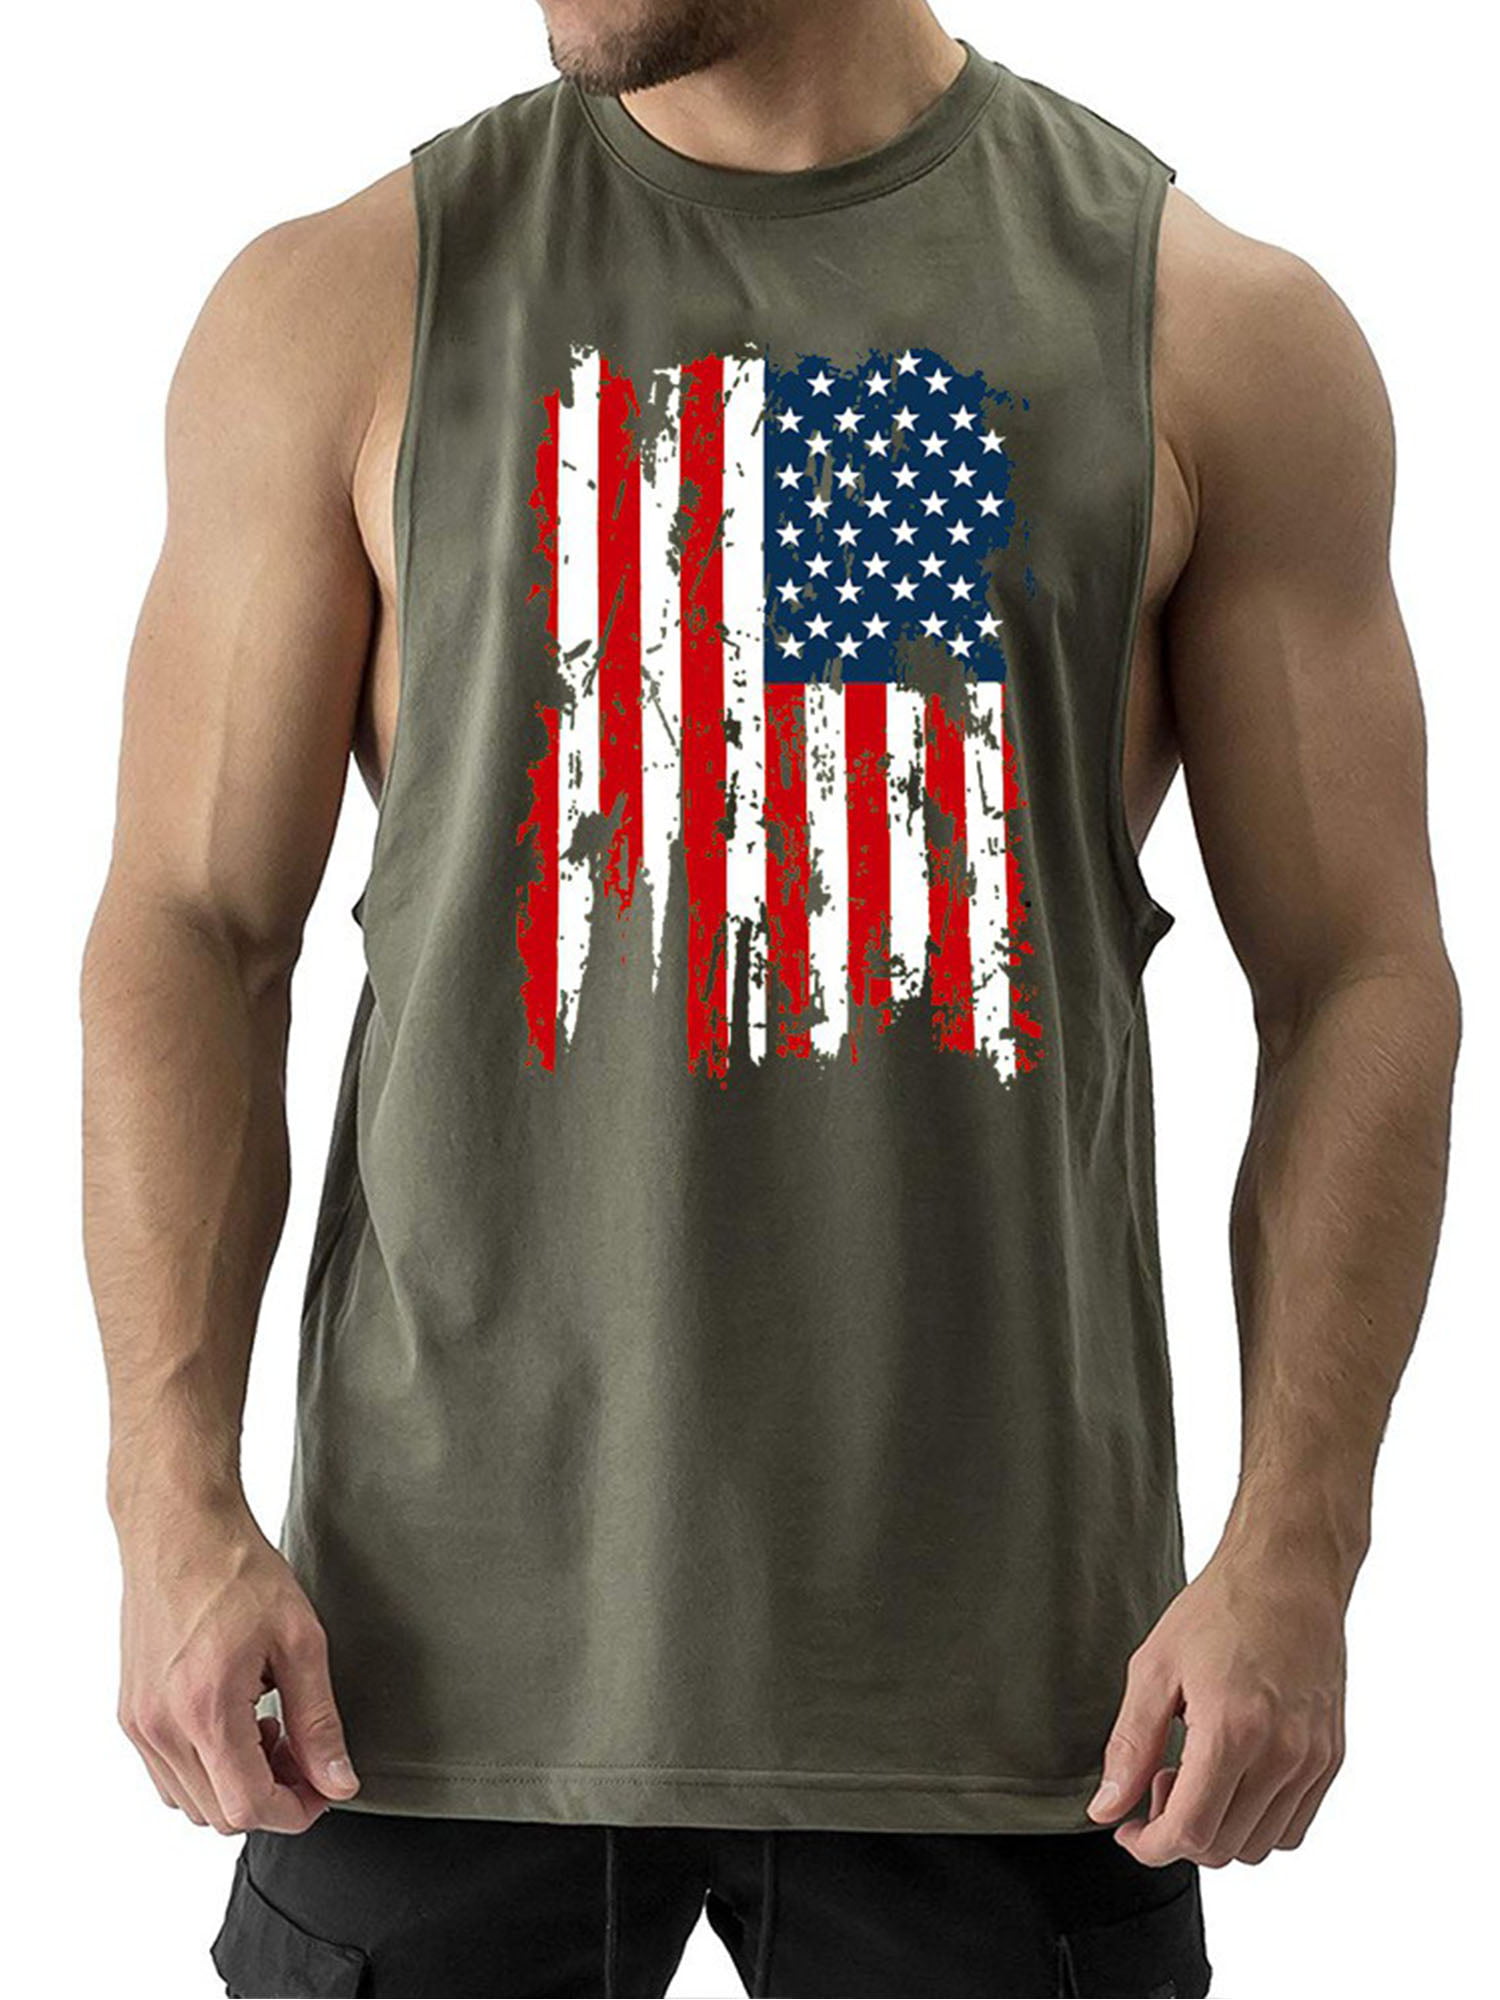 Gum Medicin leje Colisha US Flag Workout Vest Tank Top for Mens Football Beast Muscle Gym  USA American Tee - Walmart.com